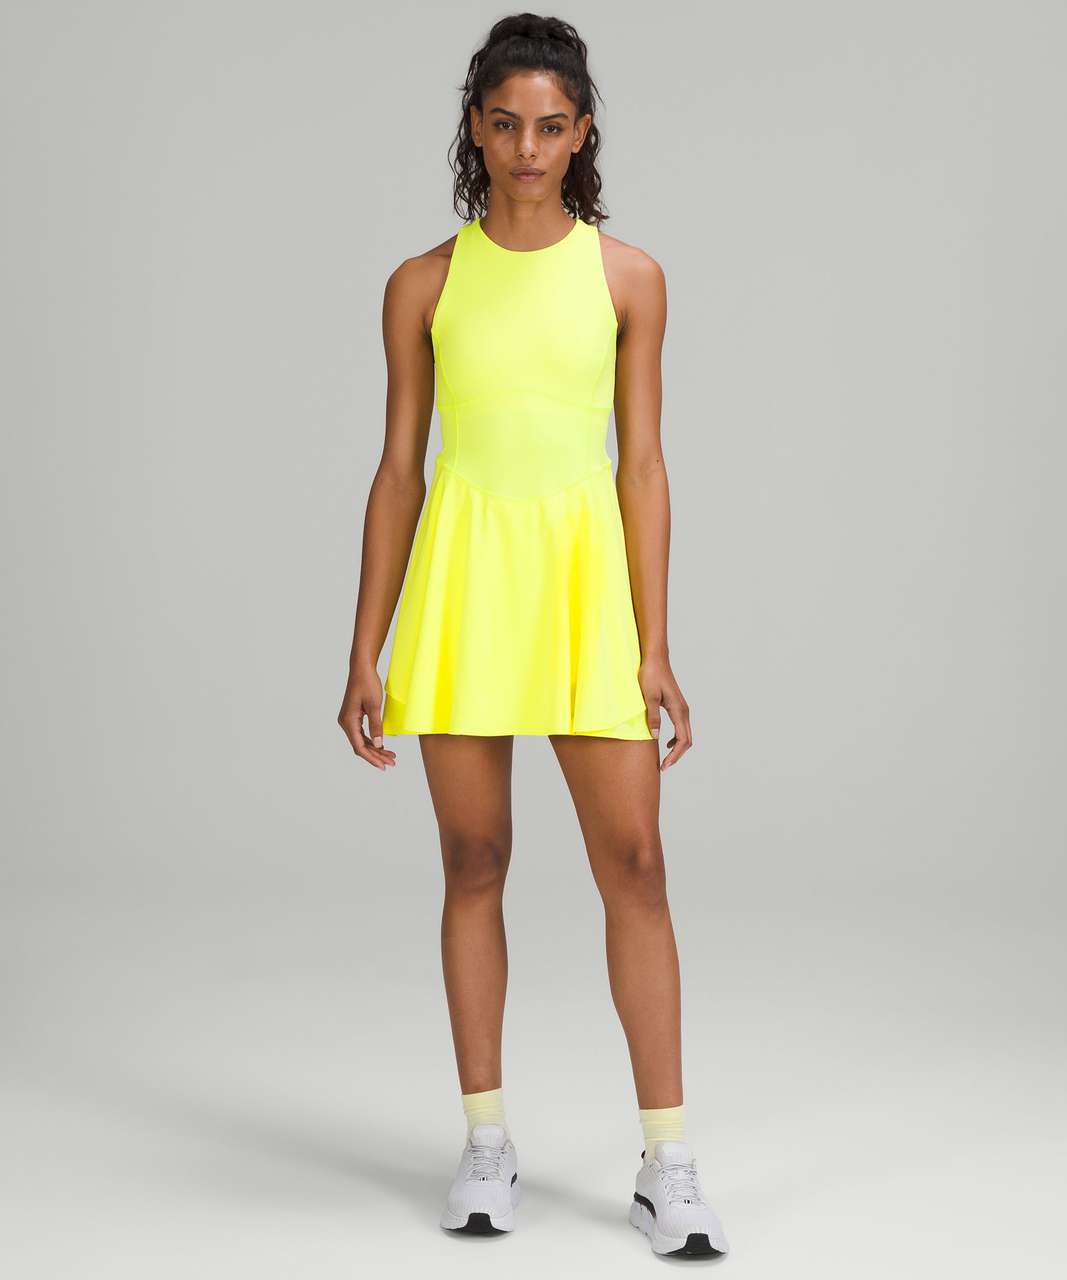 Lululemon Court Crush Dress - Electric Lemon